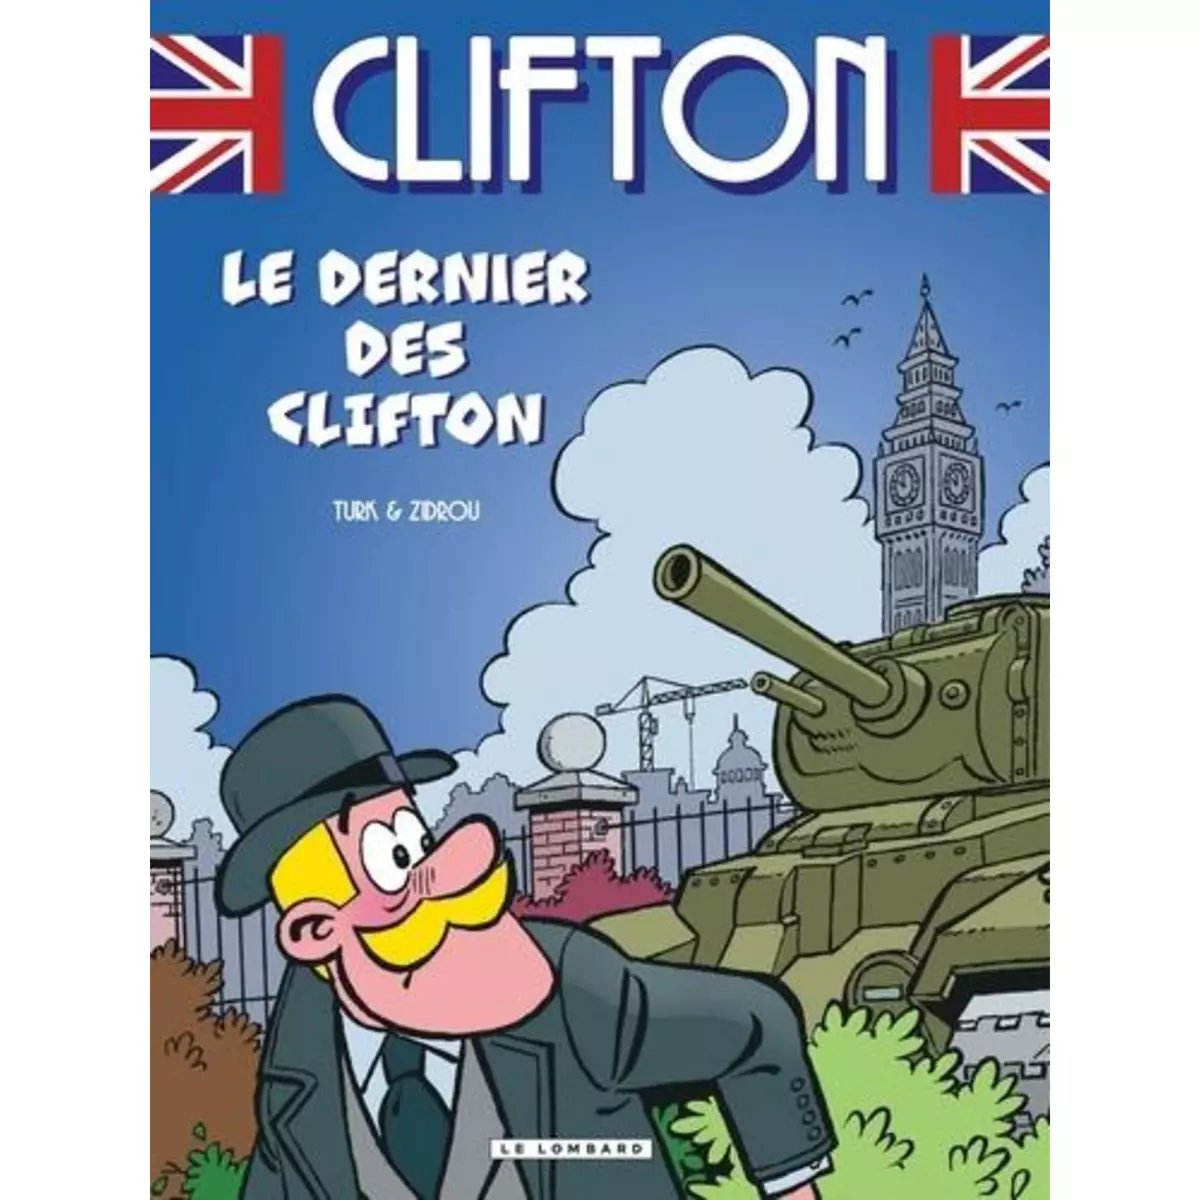  CLIFTON TOME 24 : LE DERNIER DES CLIFTON, Turk